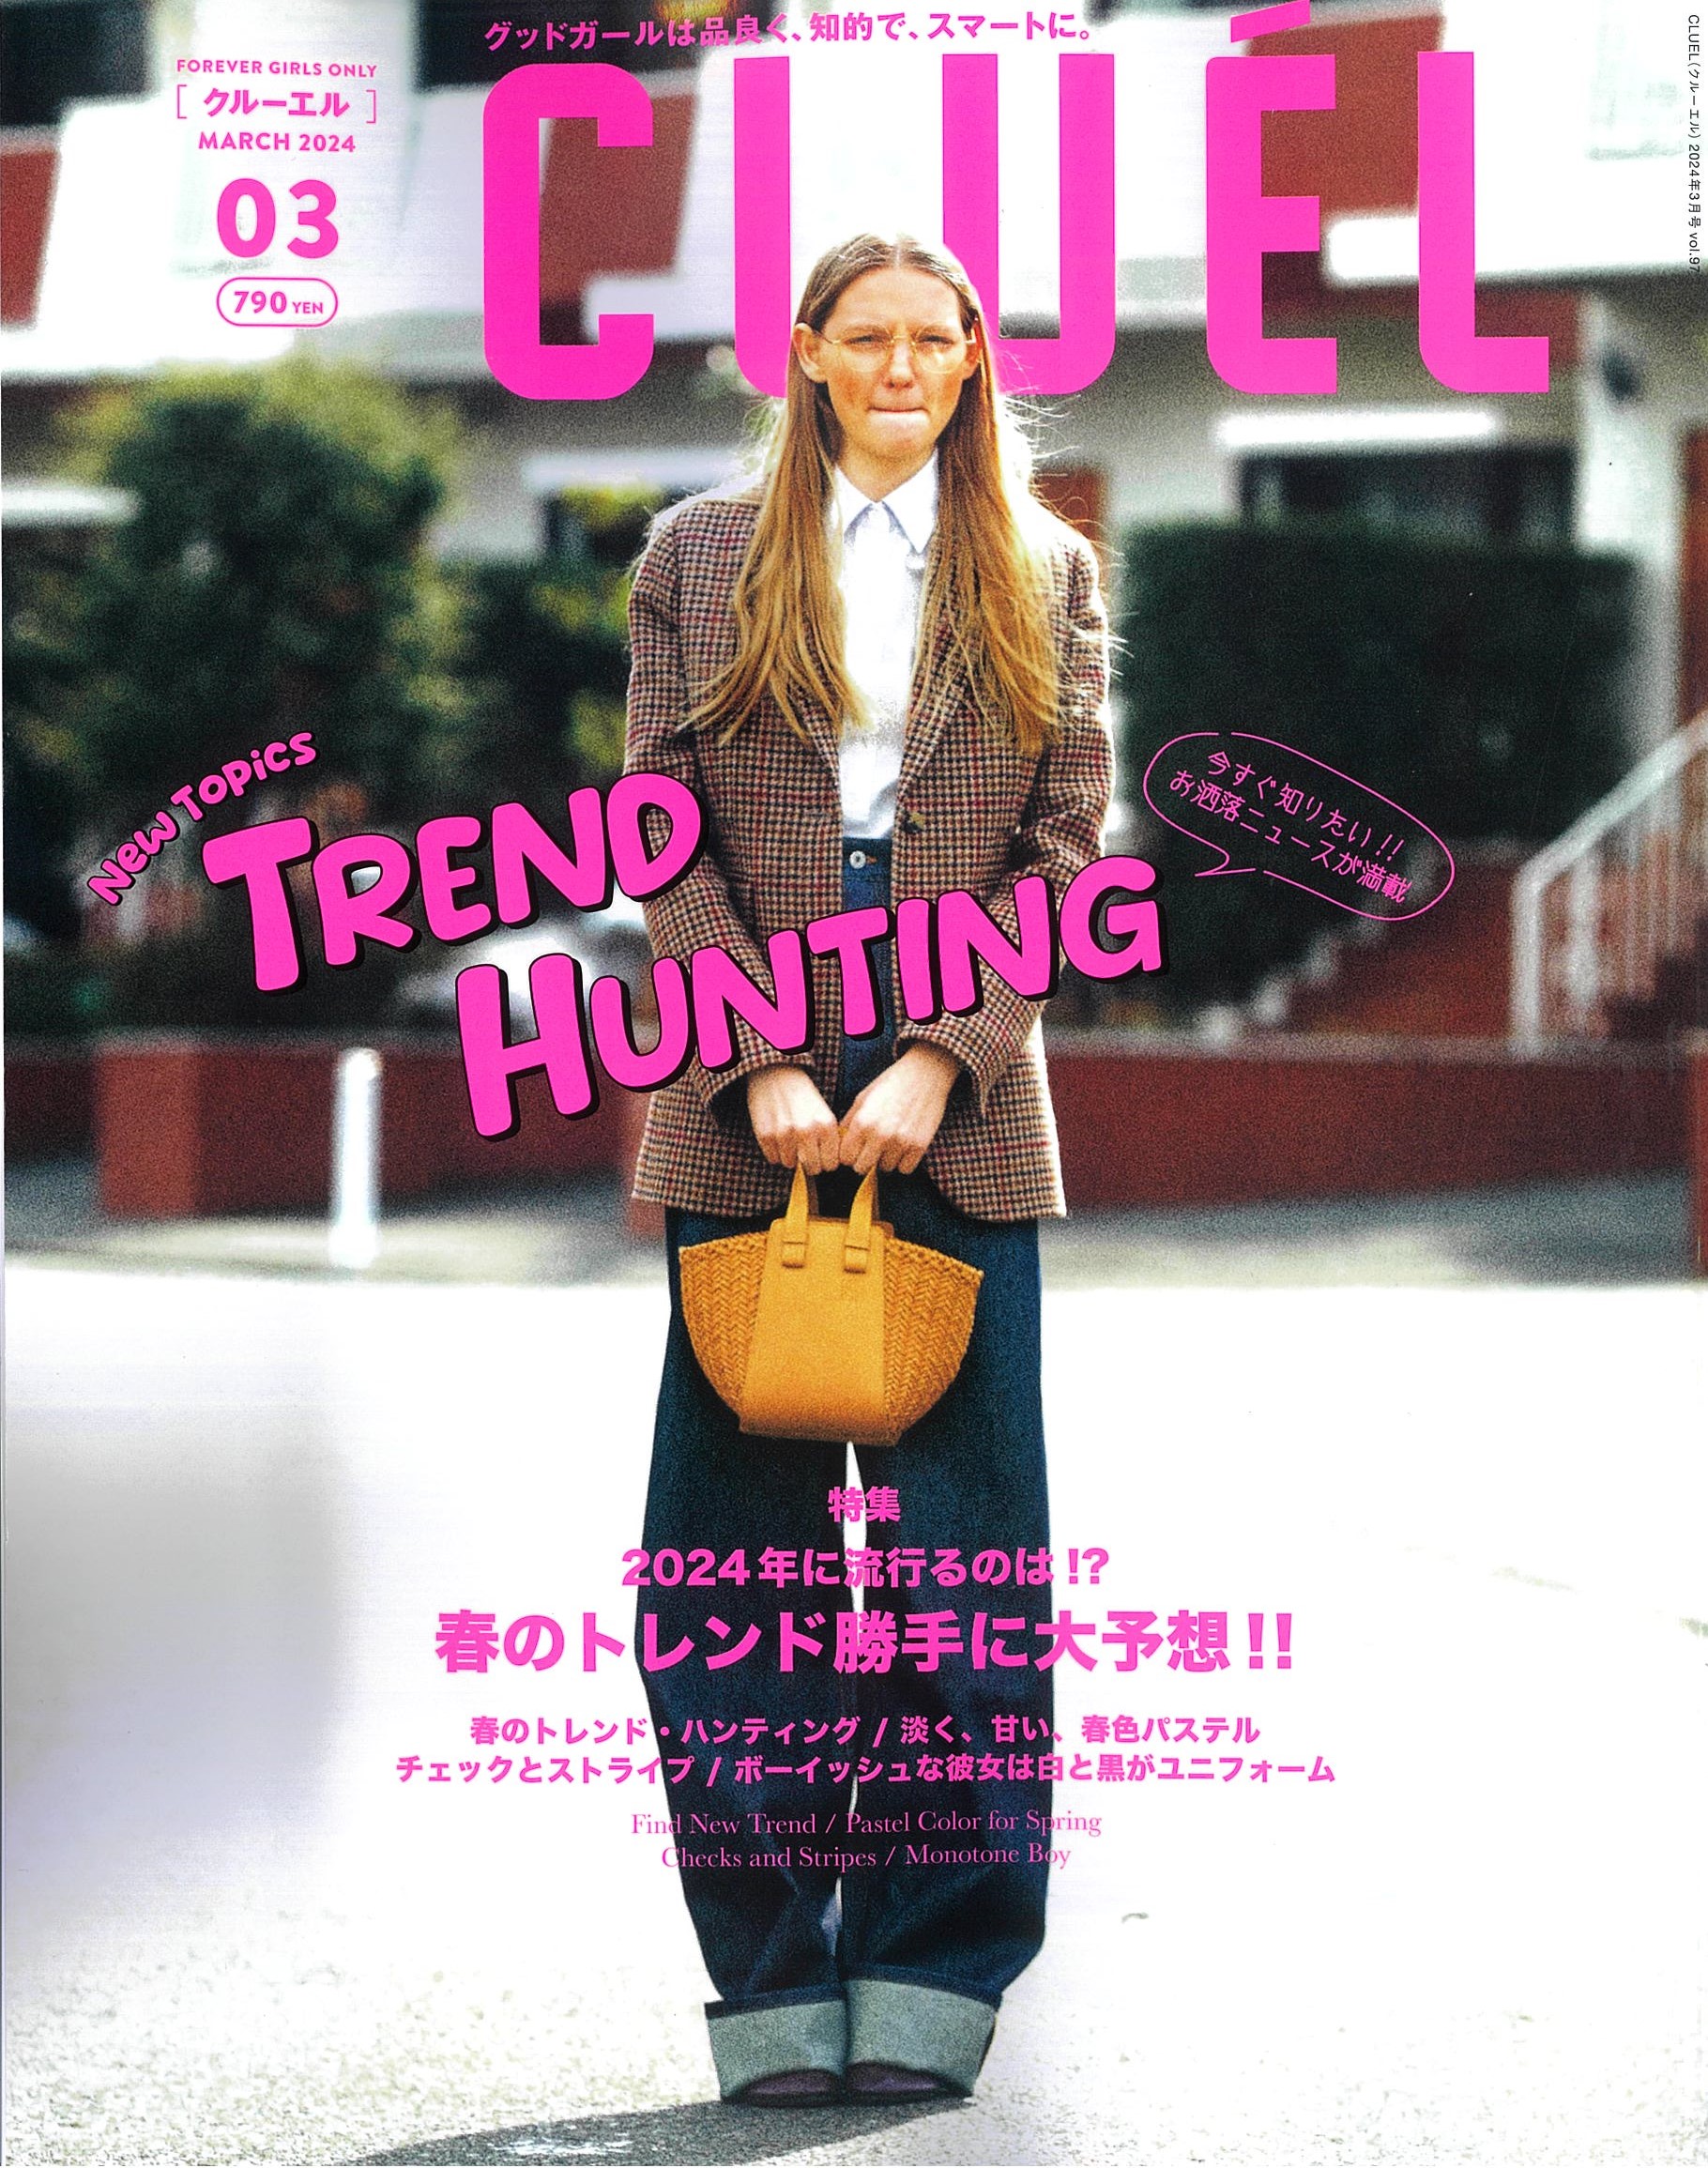 Launer London handbag is introduced in 『CLUEL』 magazine.